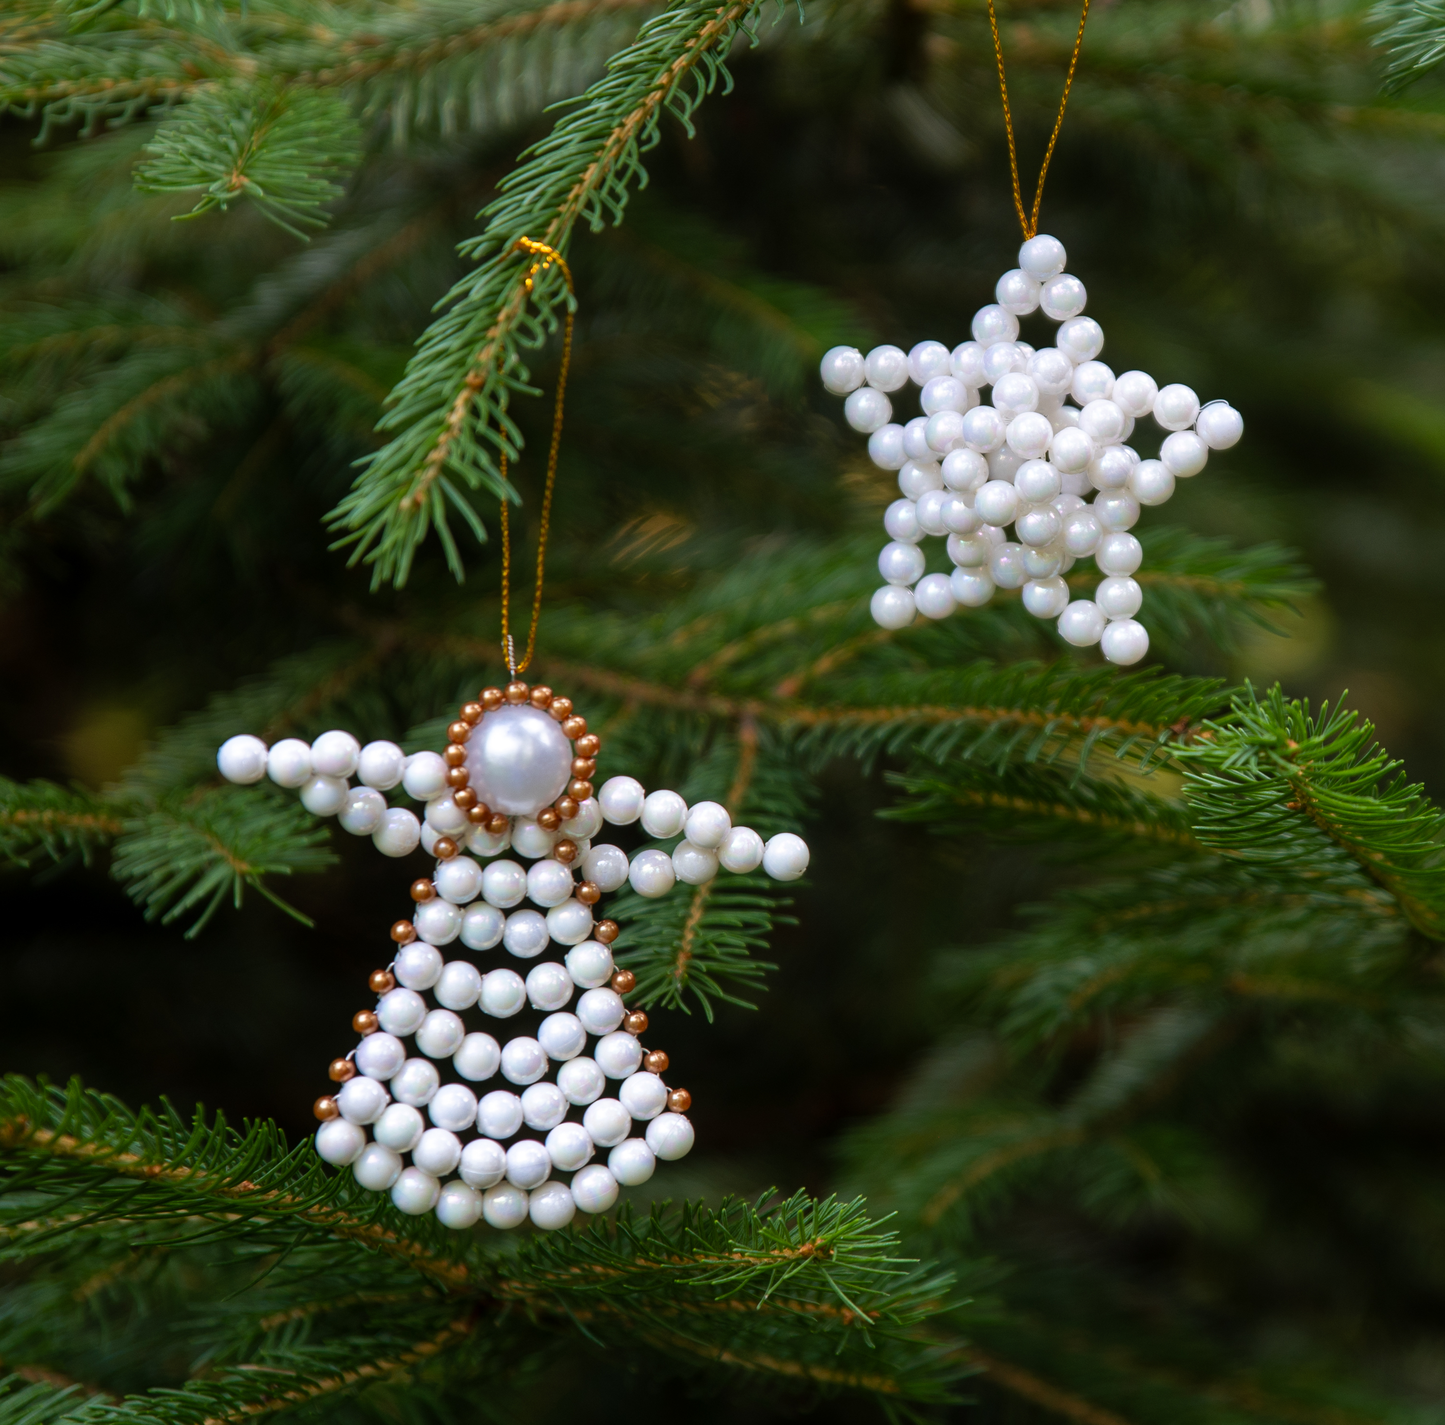 White Christmas Star Ornament